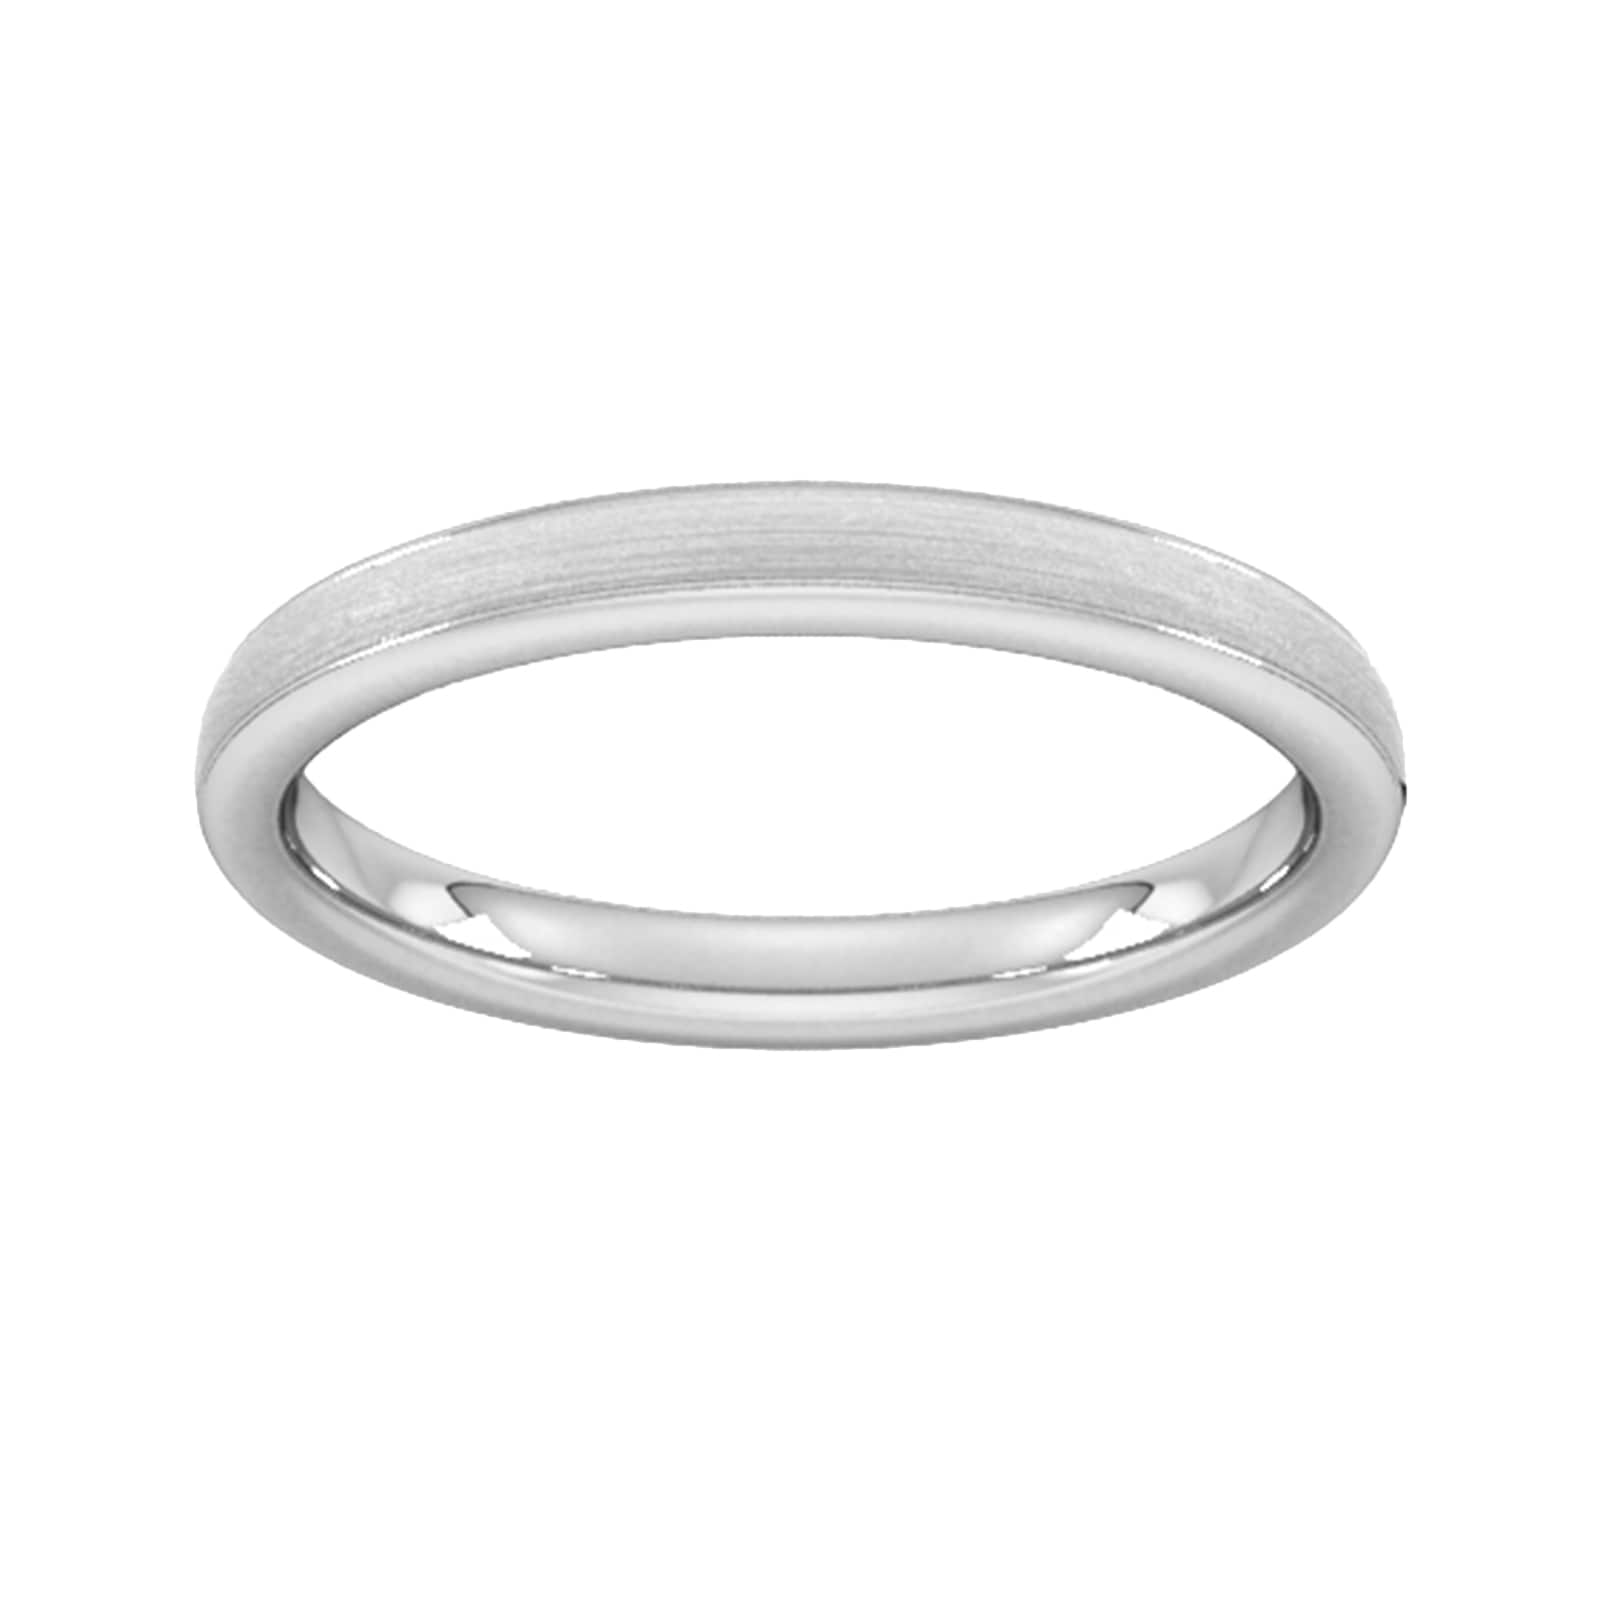 2.5mm Slight Court Standard Matt Centre With Grooves Wedding Ring In 18 Carat White Gold - Ring Size G